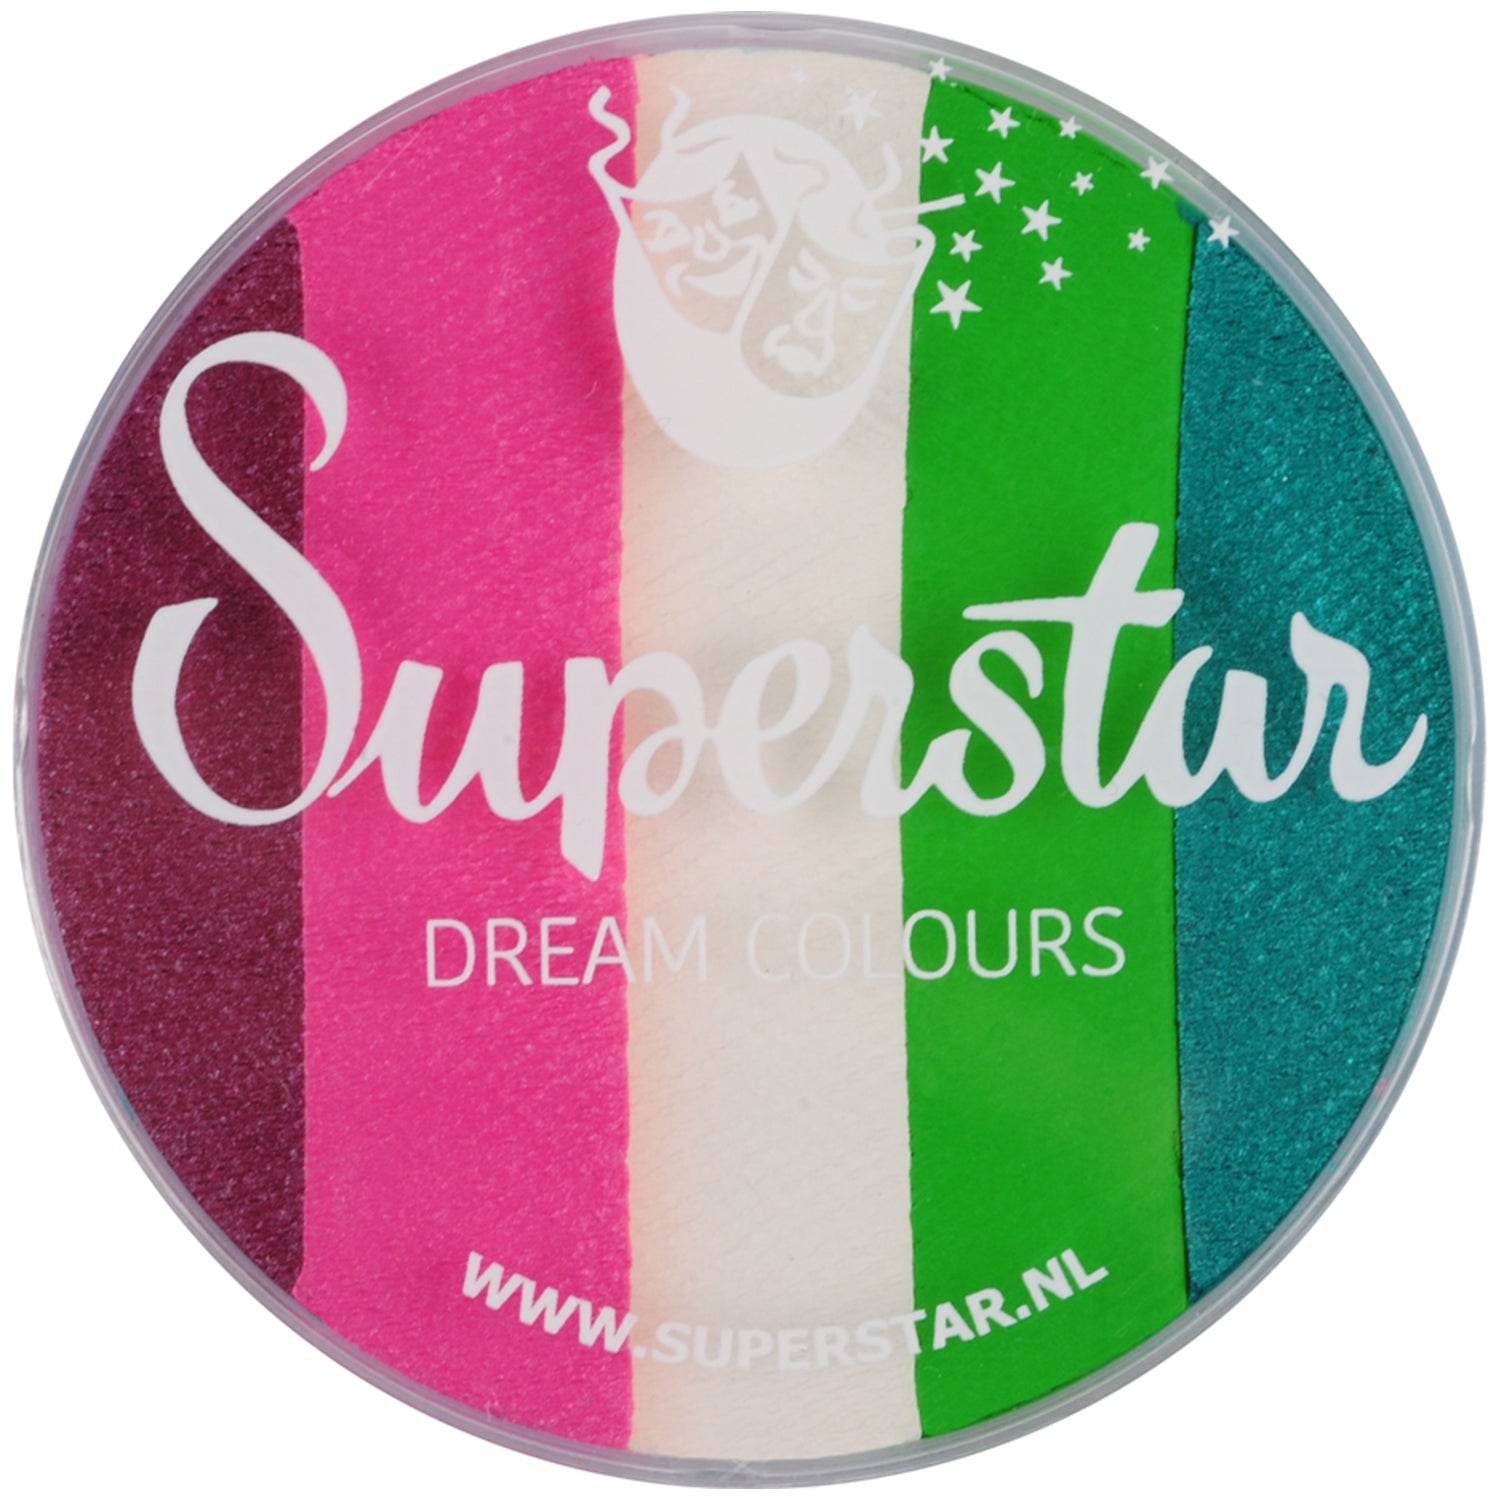 Superstar Dream Colours Rainbow Cake - Flower #910 (45 gm/ 1.59 oz)